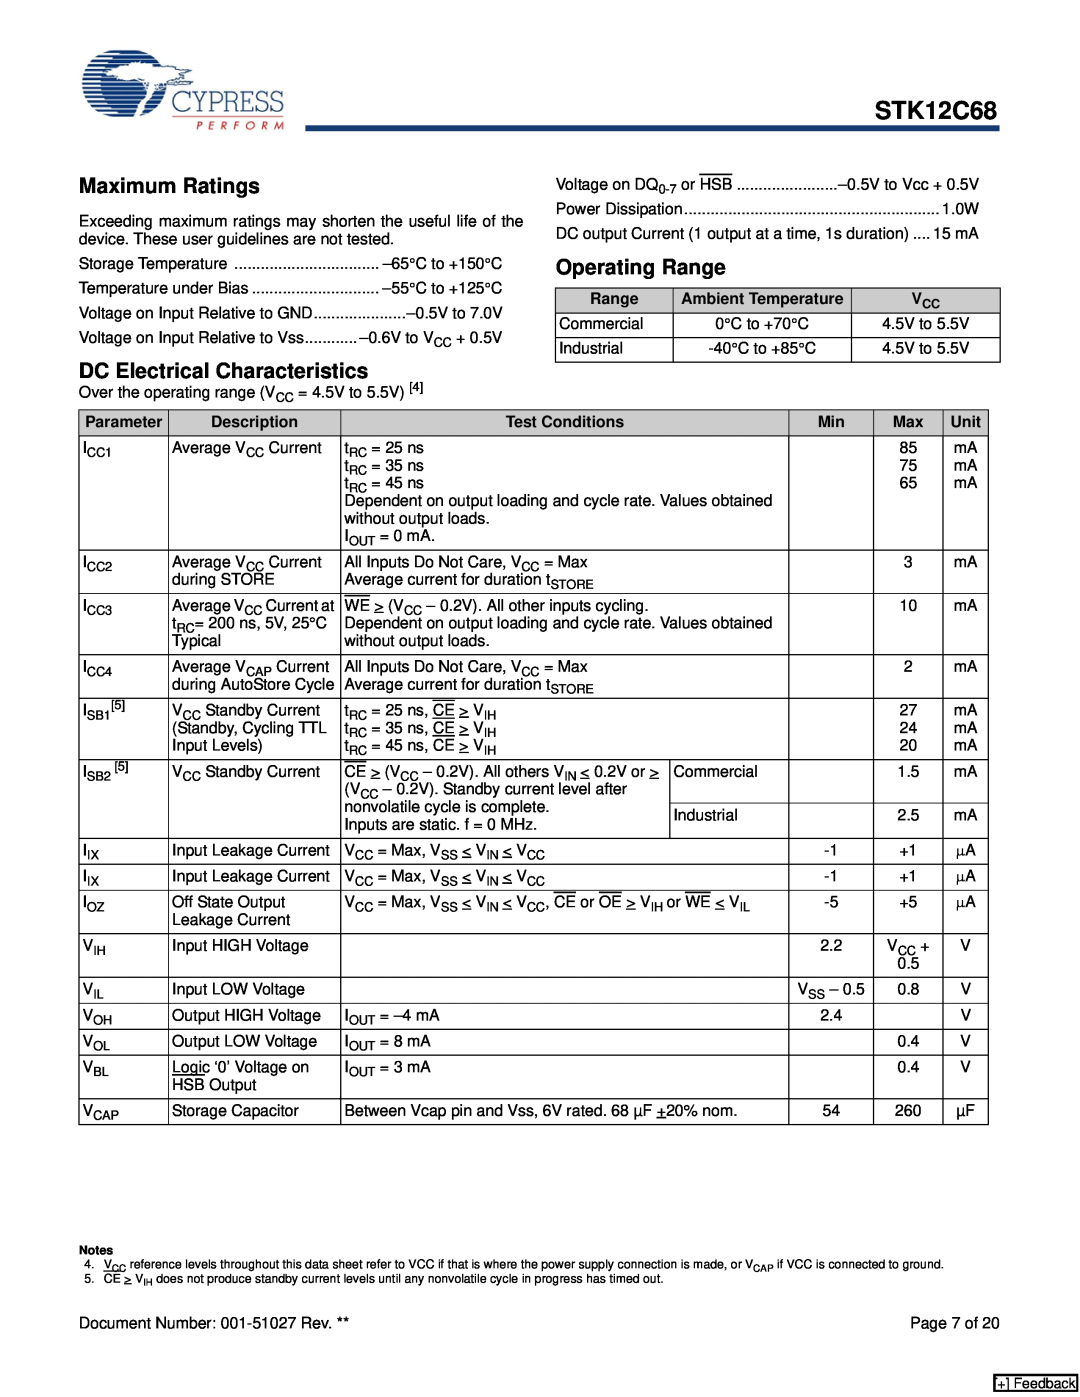 Cypress STK12C68 manual Maximum Ratings, DC Electrical Characteristics, Operating Range 